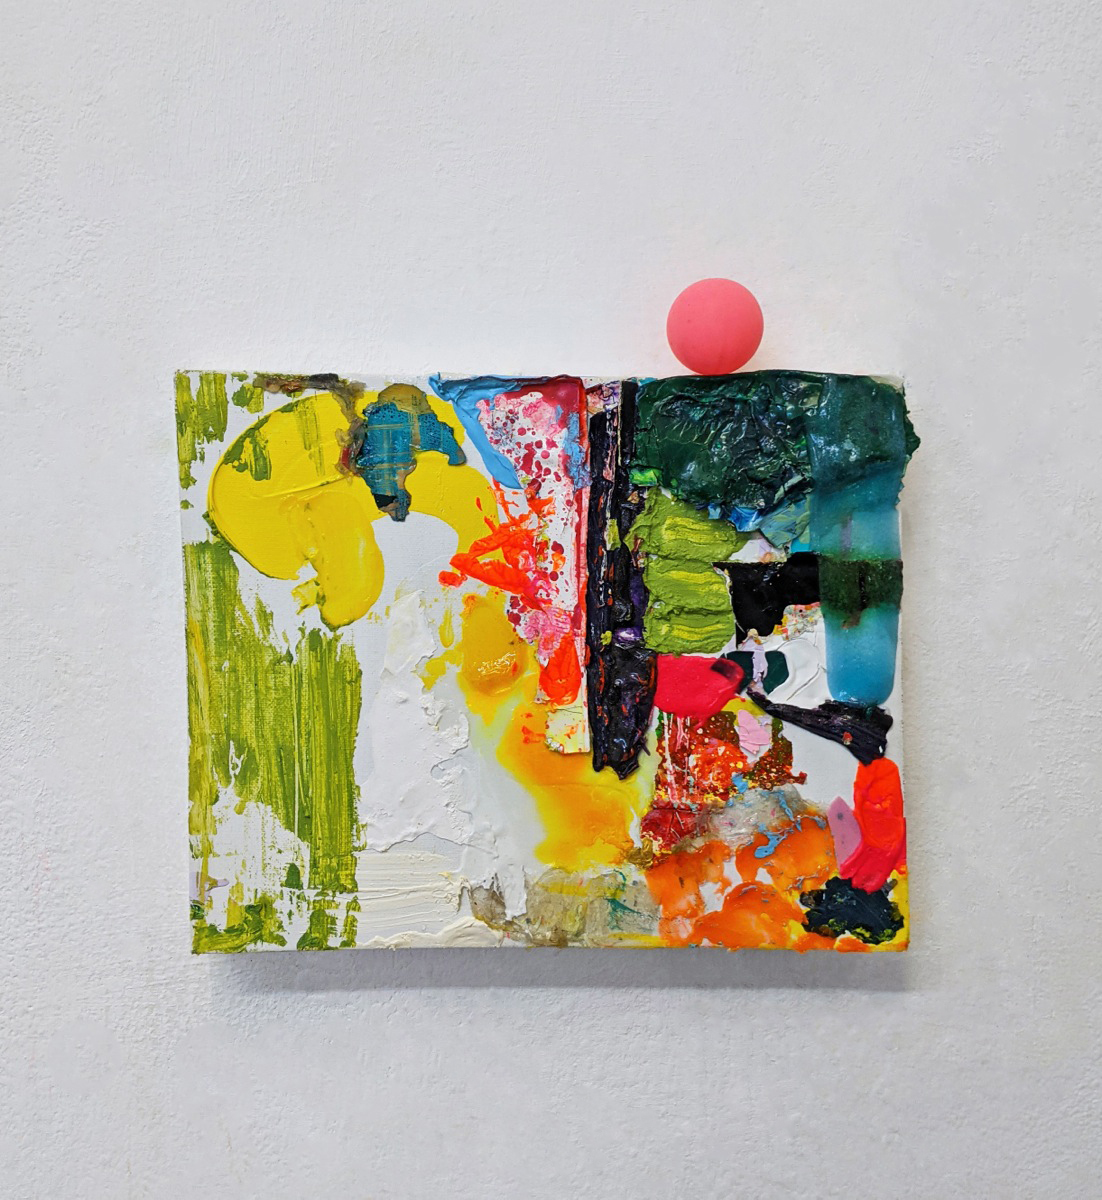 "Sleeping Clown", 27x30 cm, Acrylfarben, Leinwand, Pingpong-Ball, 2020